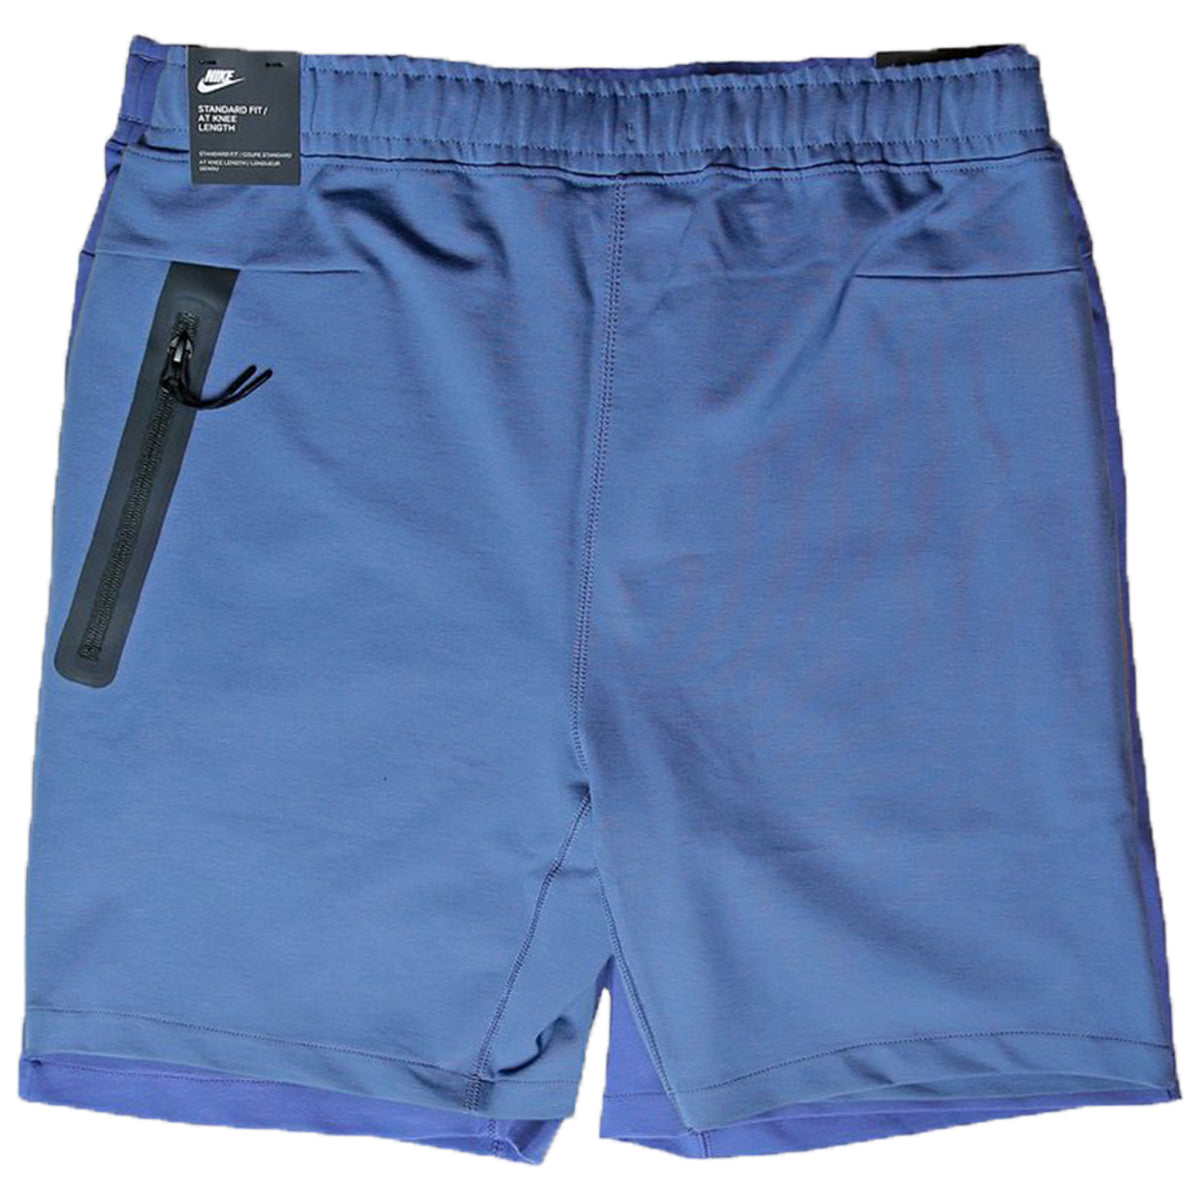 Nike Sportswear Shorts Mens Style : Cj4284